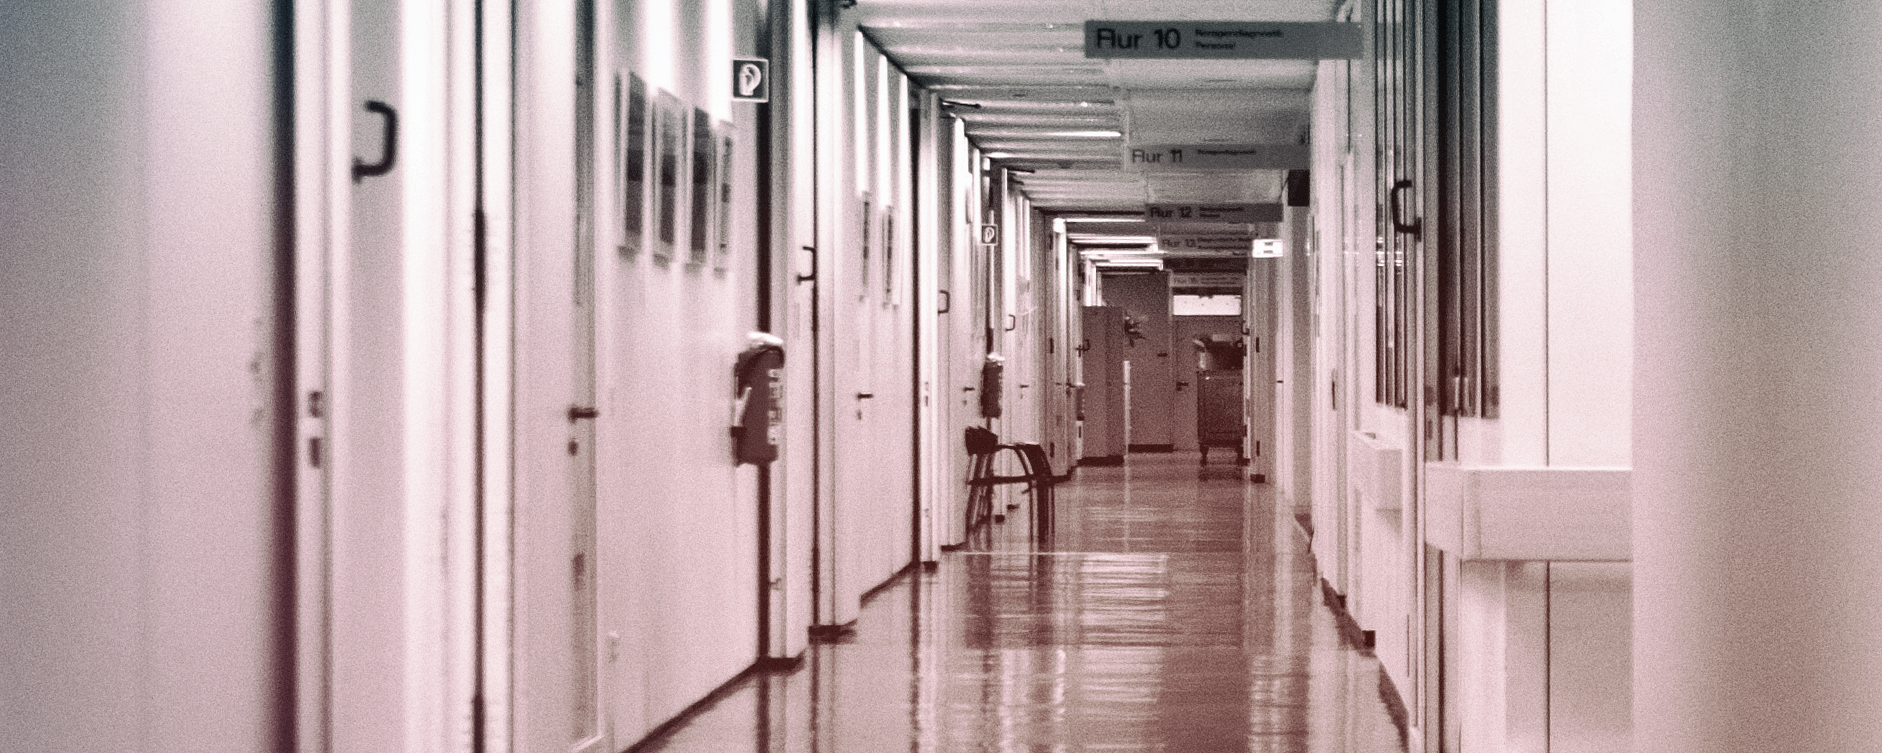 A corridor in a hospital.